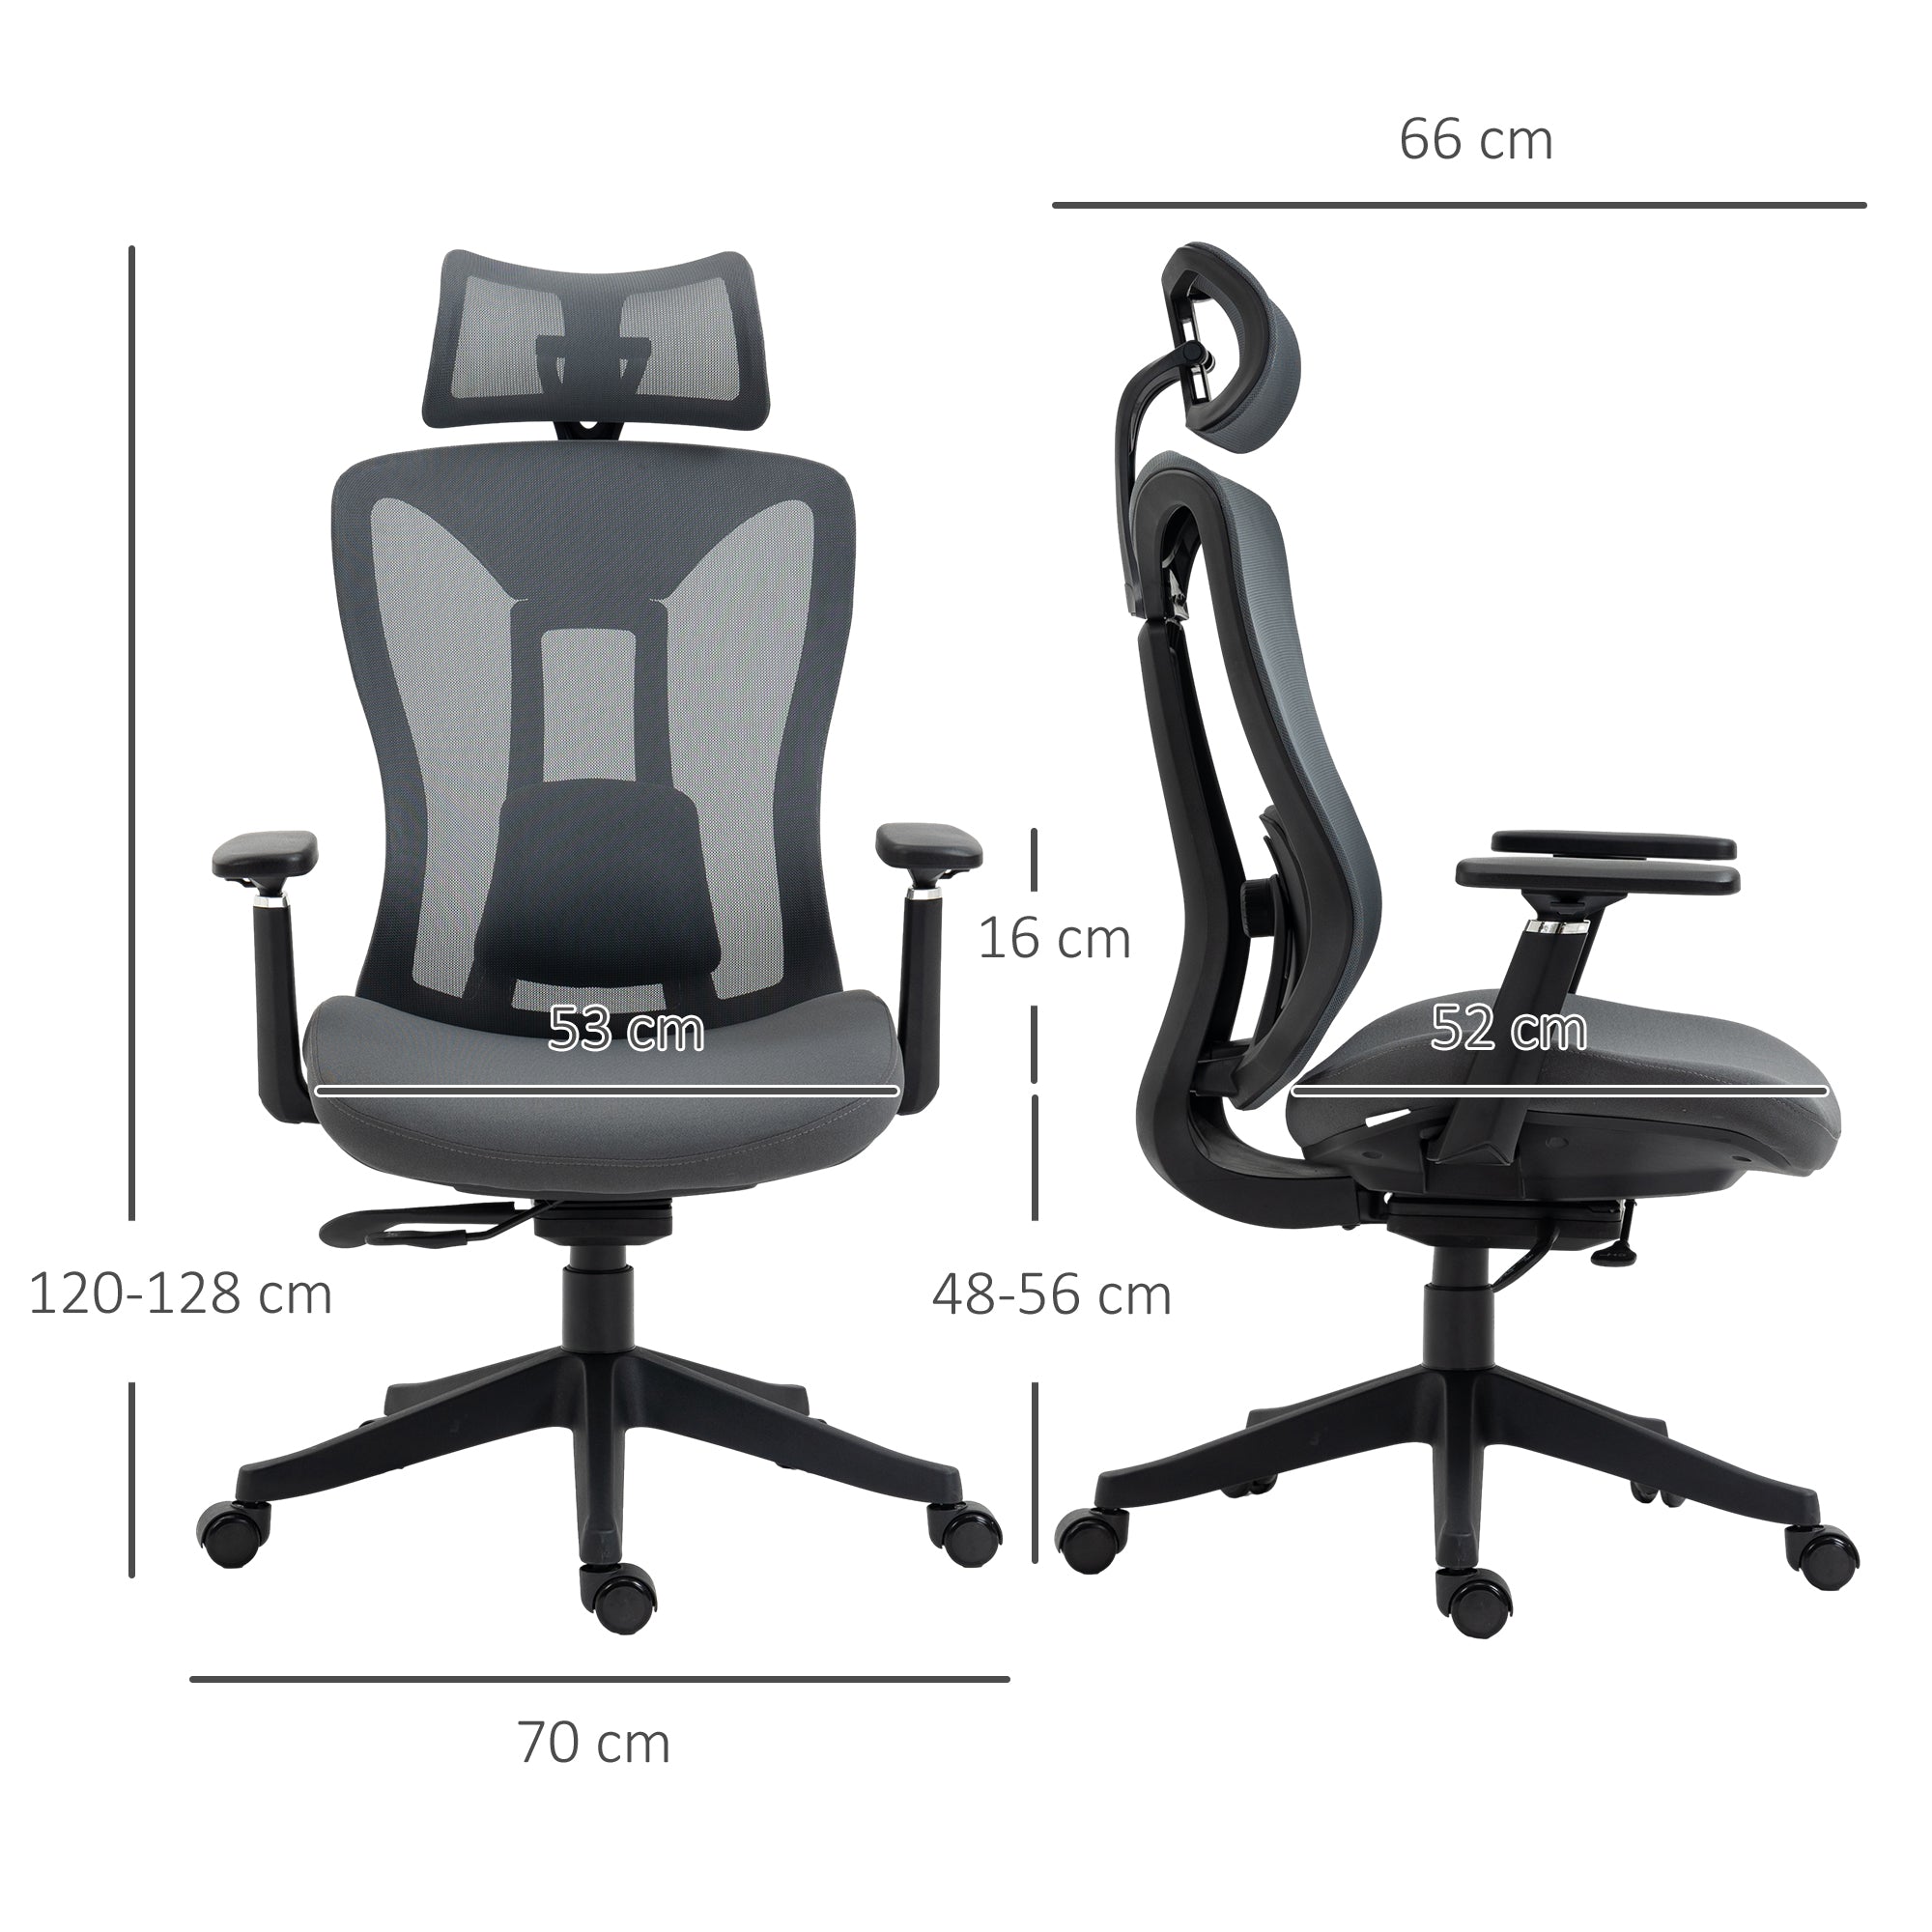 Mesh Office Chair, Reclining Desk Chair with Adjustable Headrest, Lumbar Support, 3D Armrest, Sliding Seat, Swivel Wheels, Grey-2